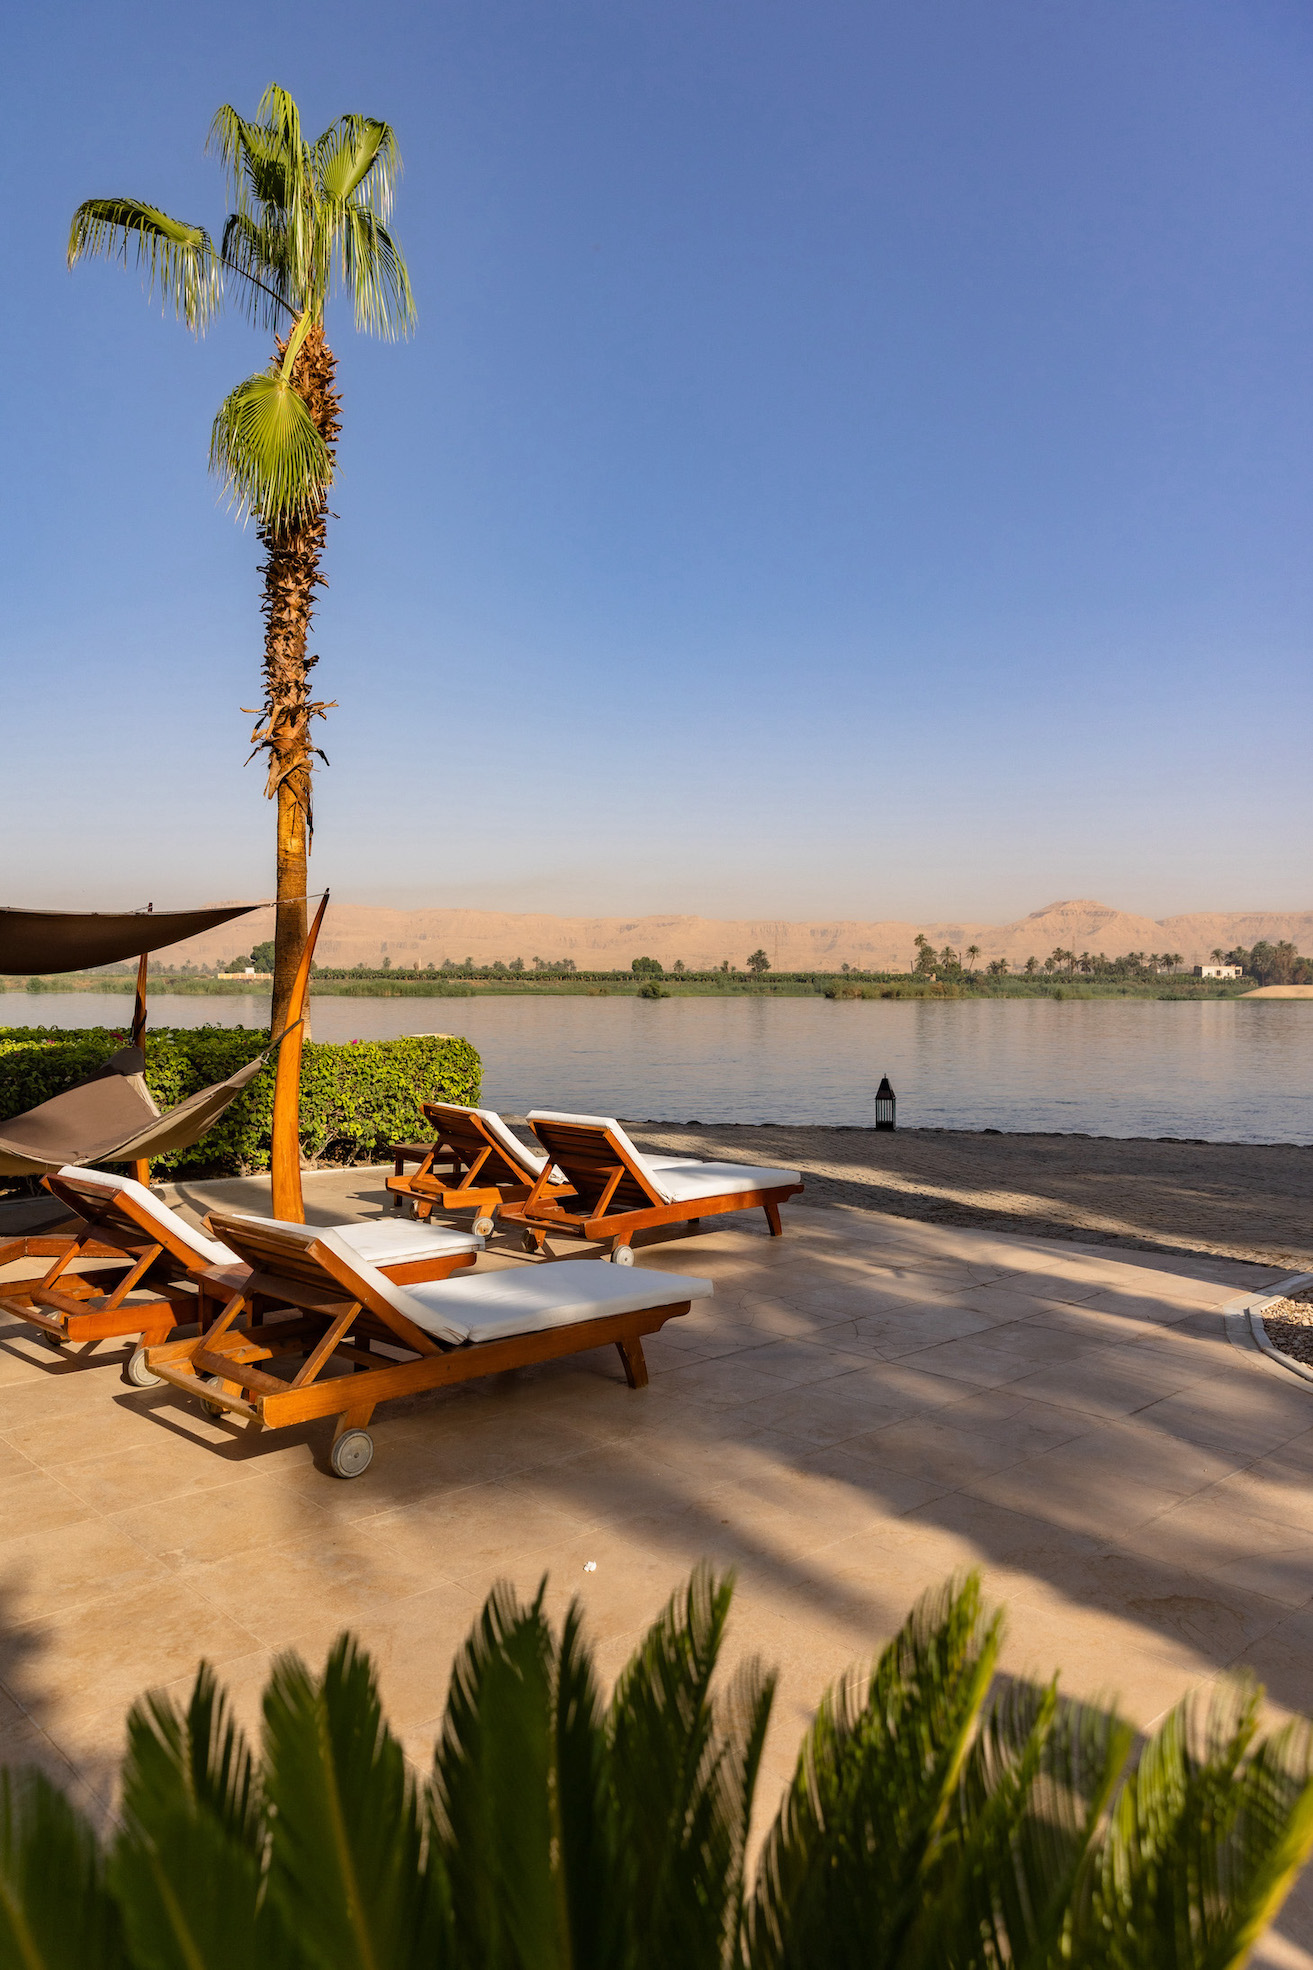 Reiseziele Ägypten Egypt Hilton Hotel Luxor Nil